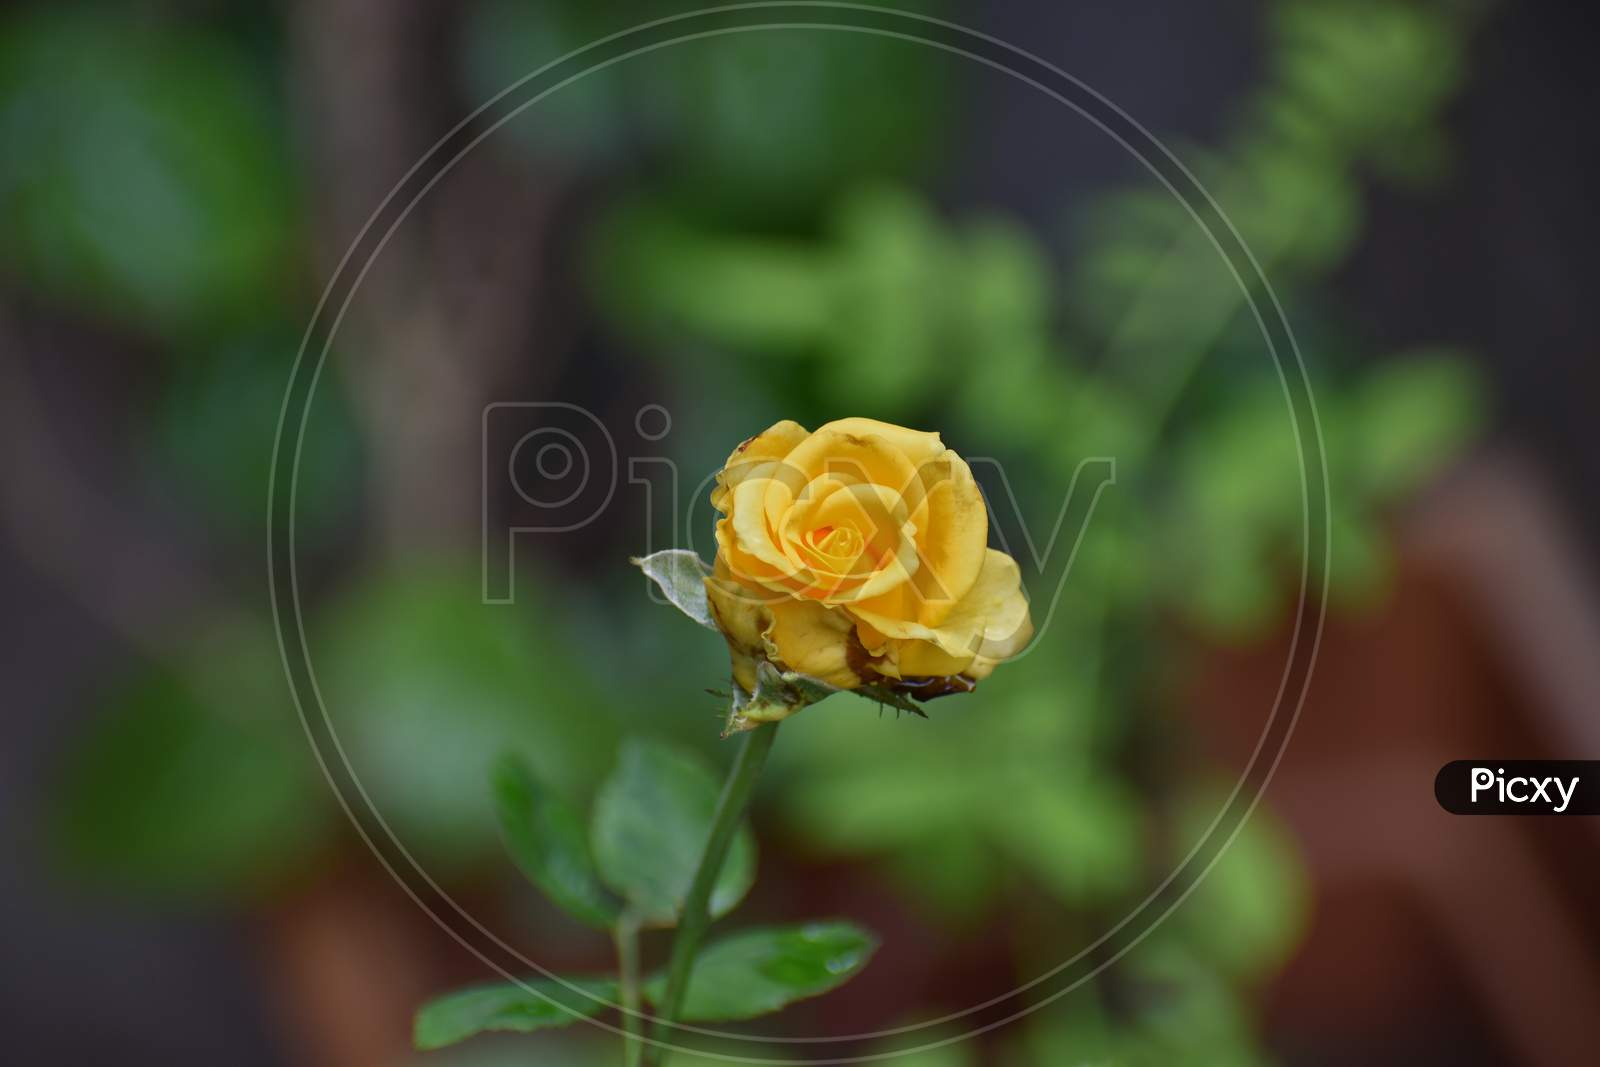 Rose in garden